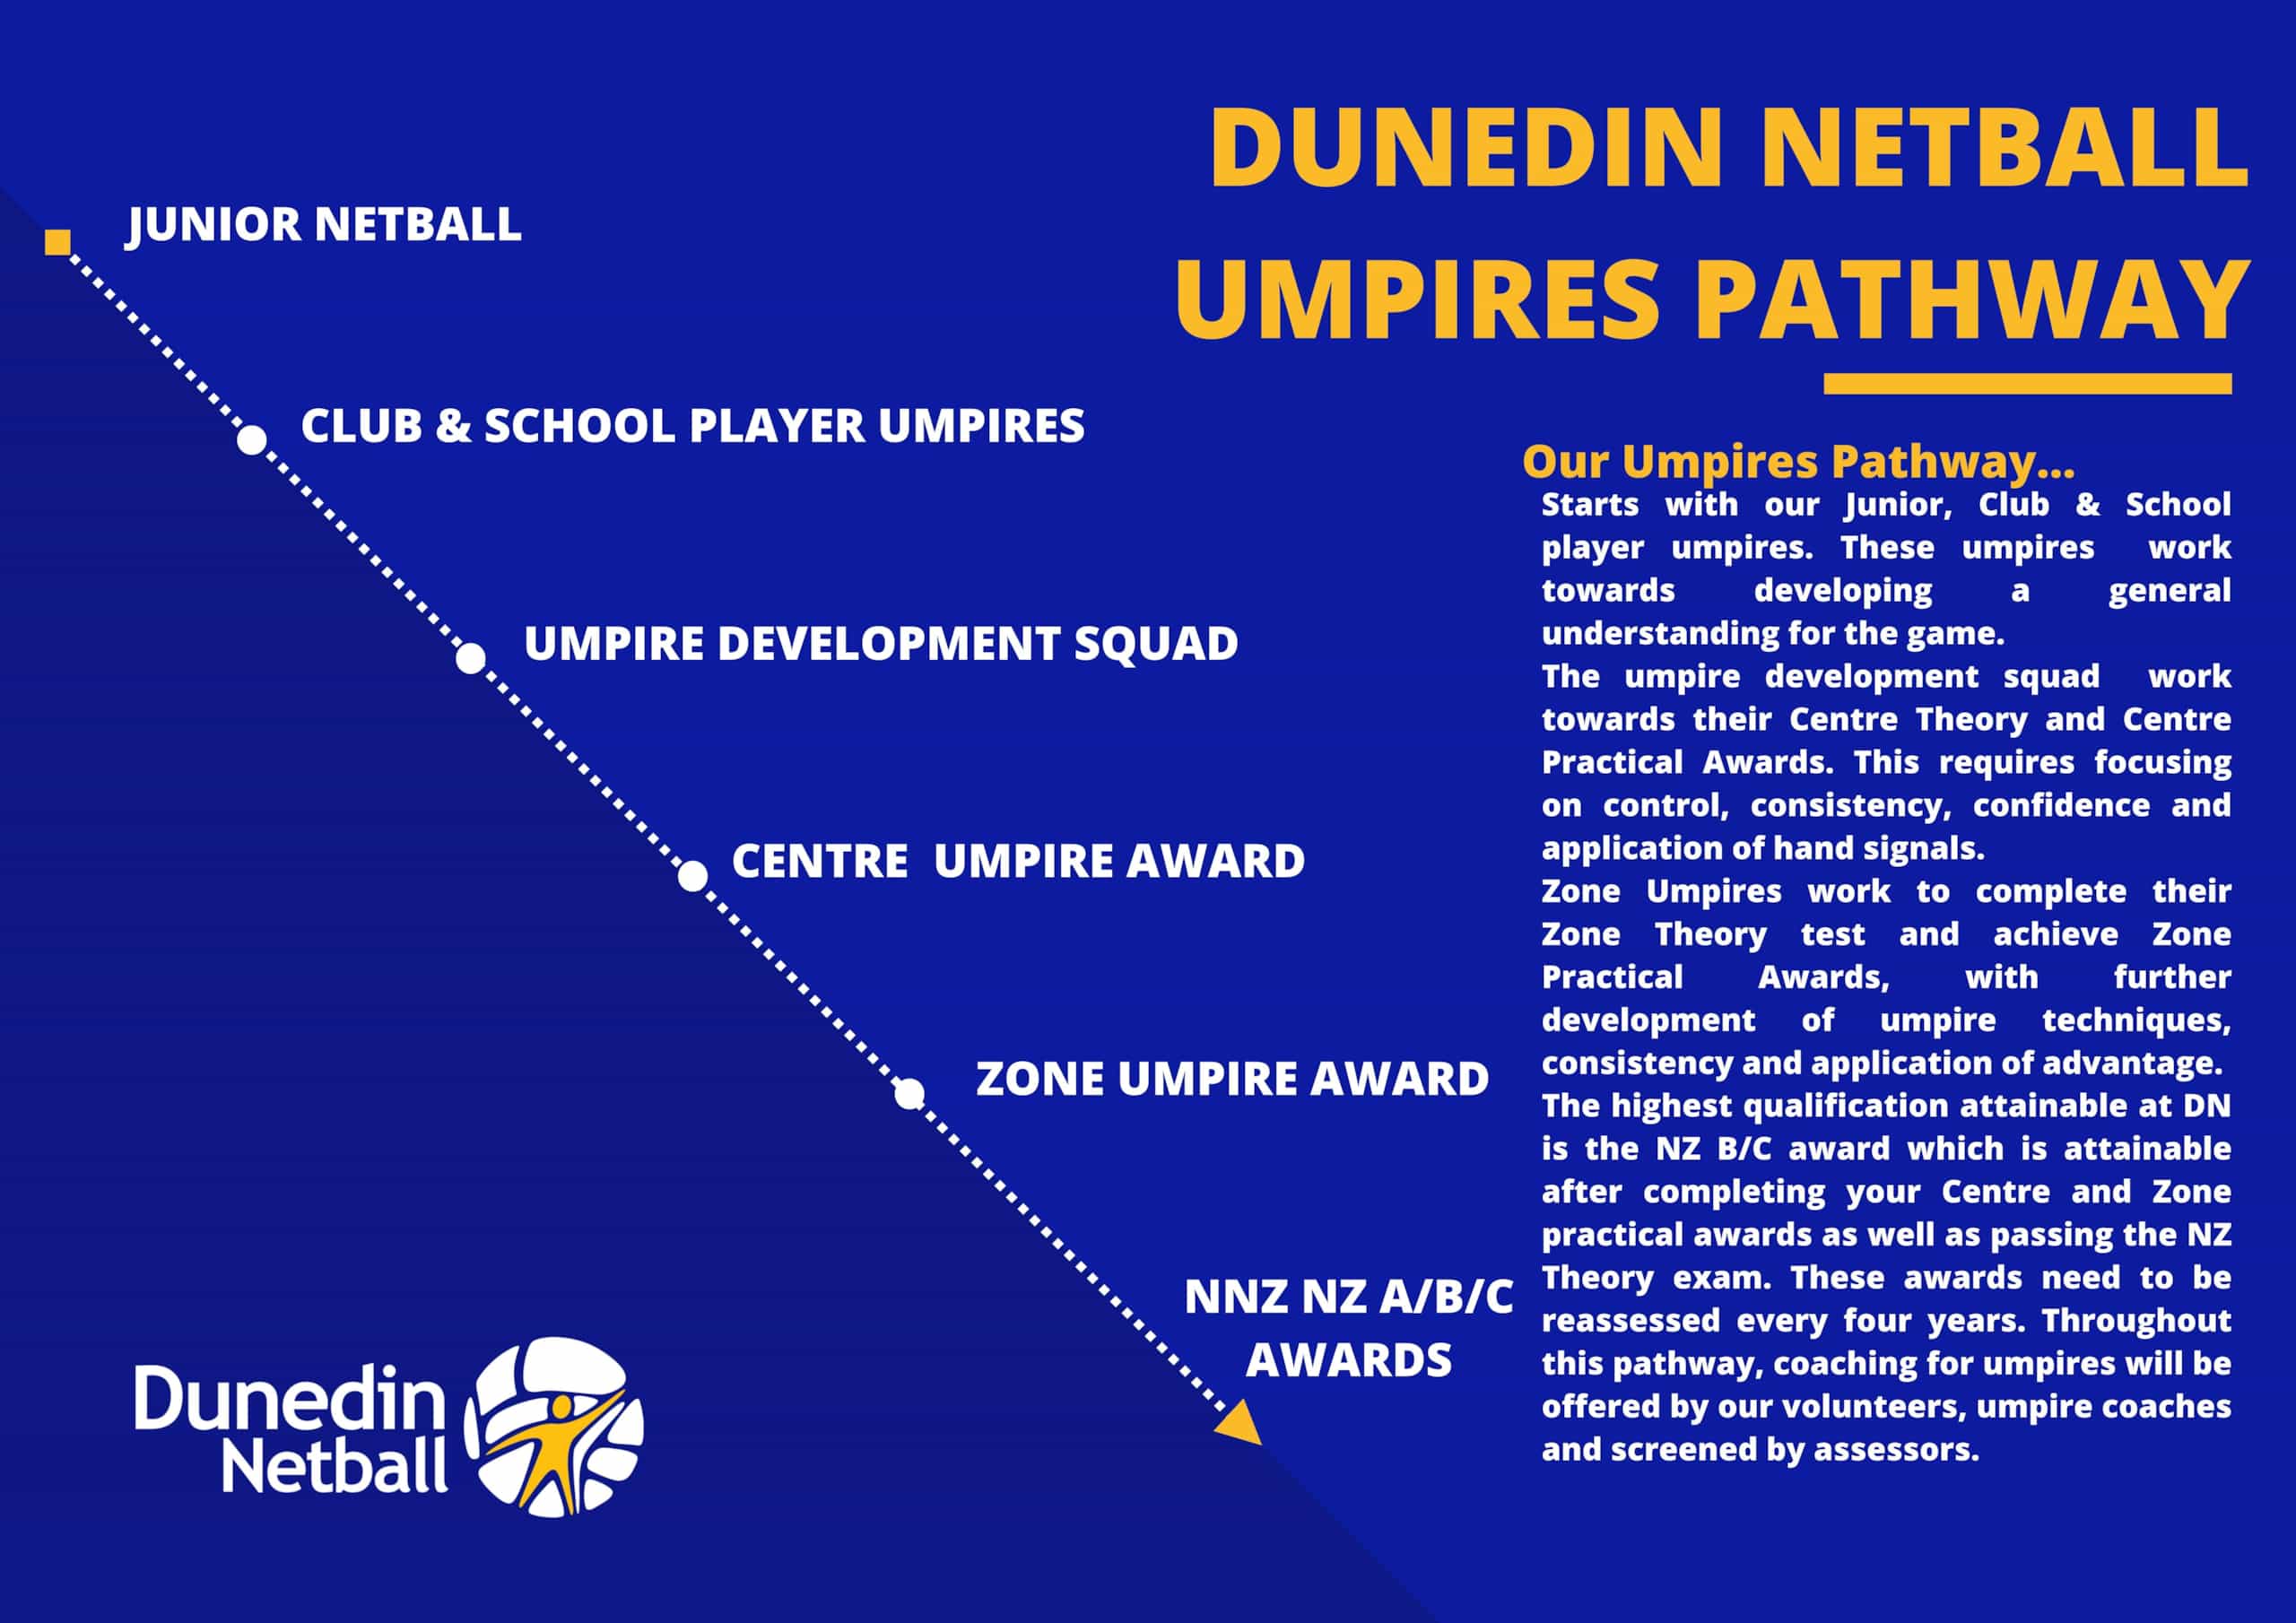 Dunedin Netball Umpire Pathway (297 × 210mm) - 1